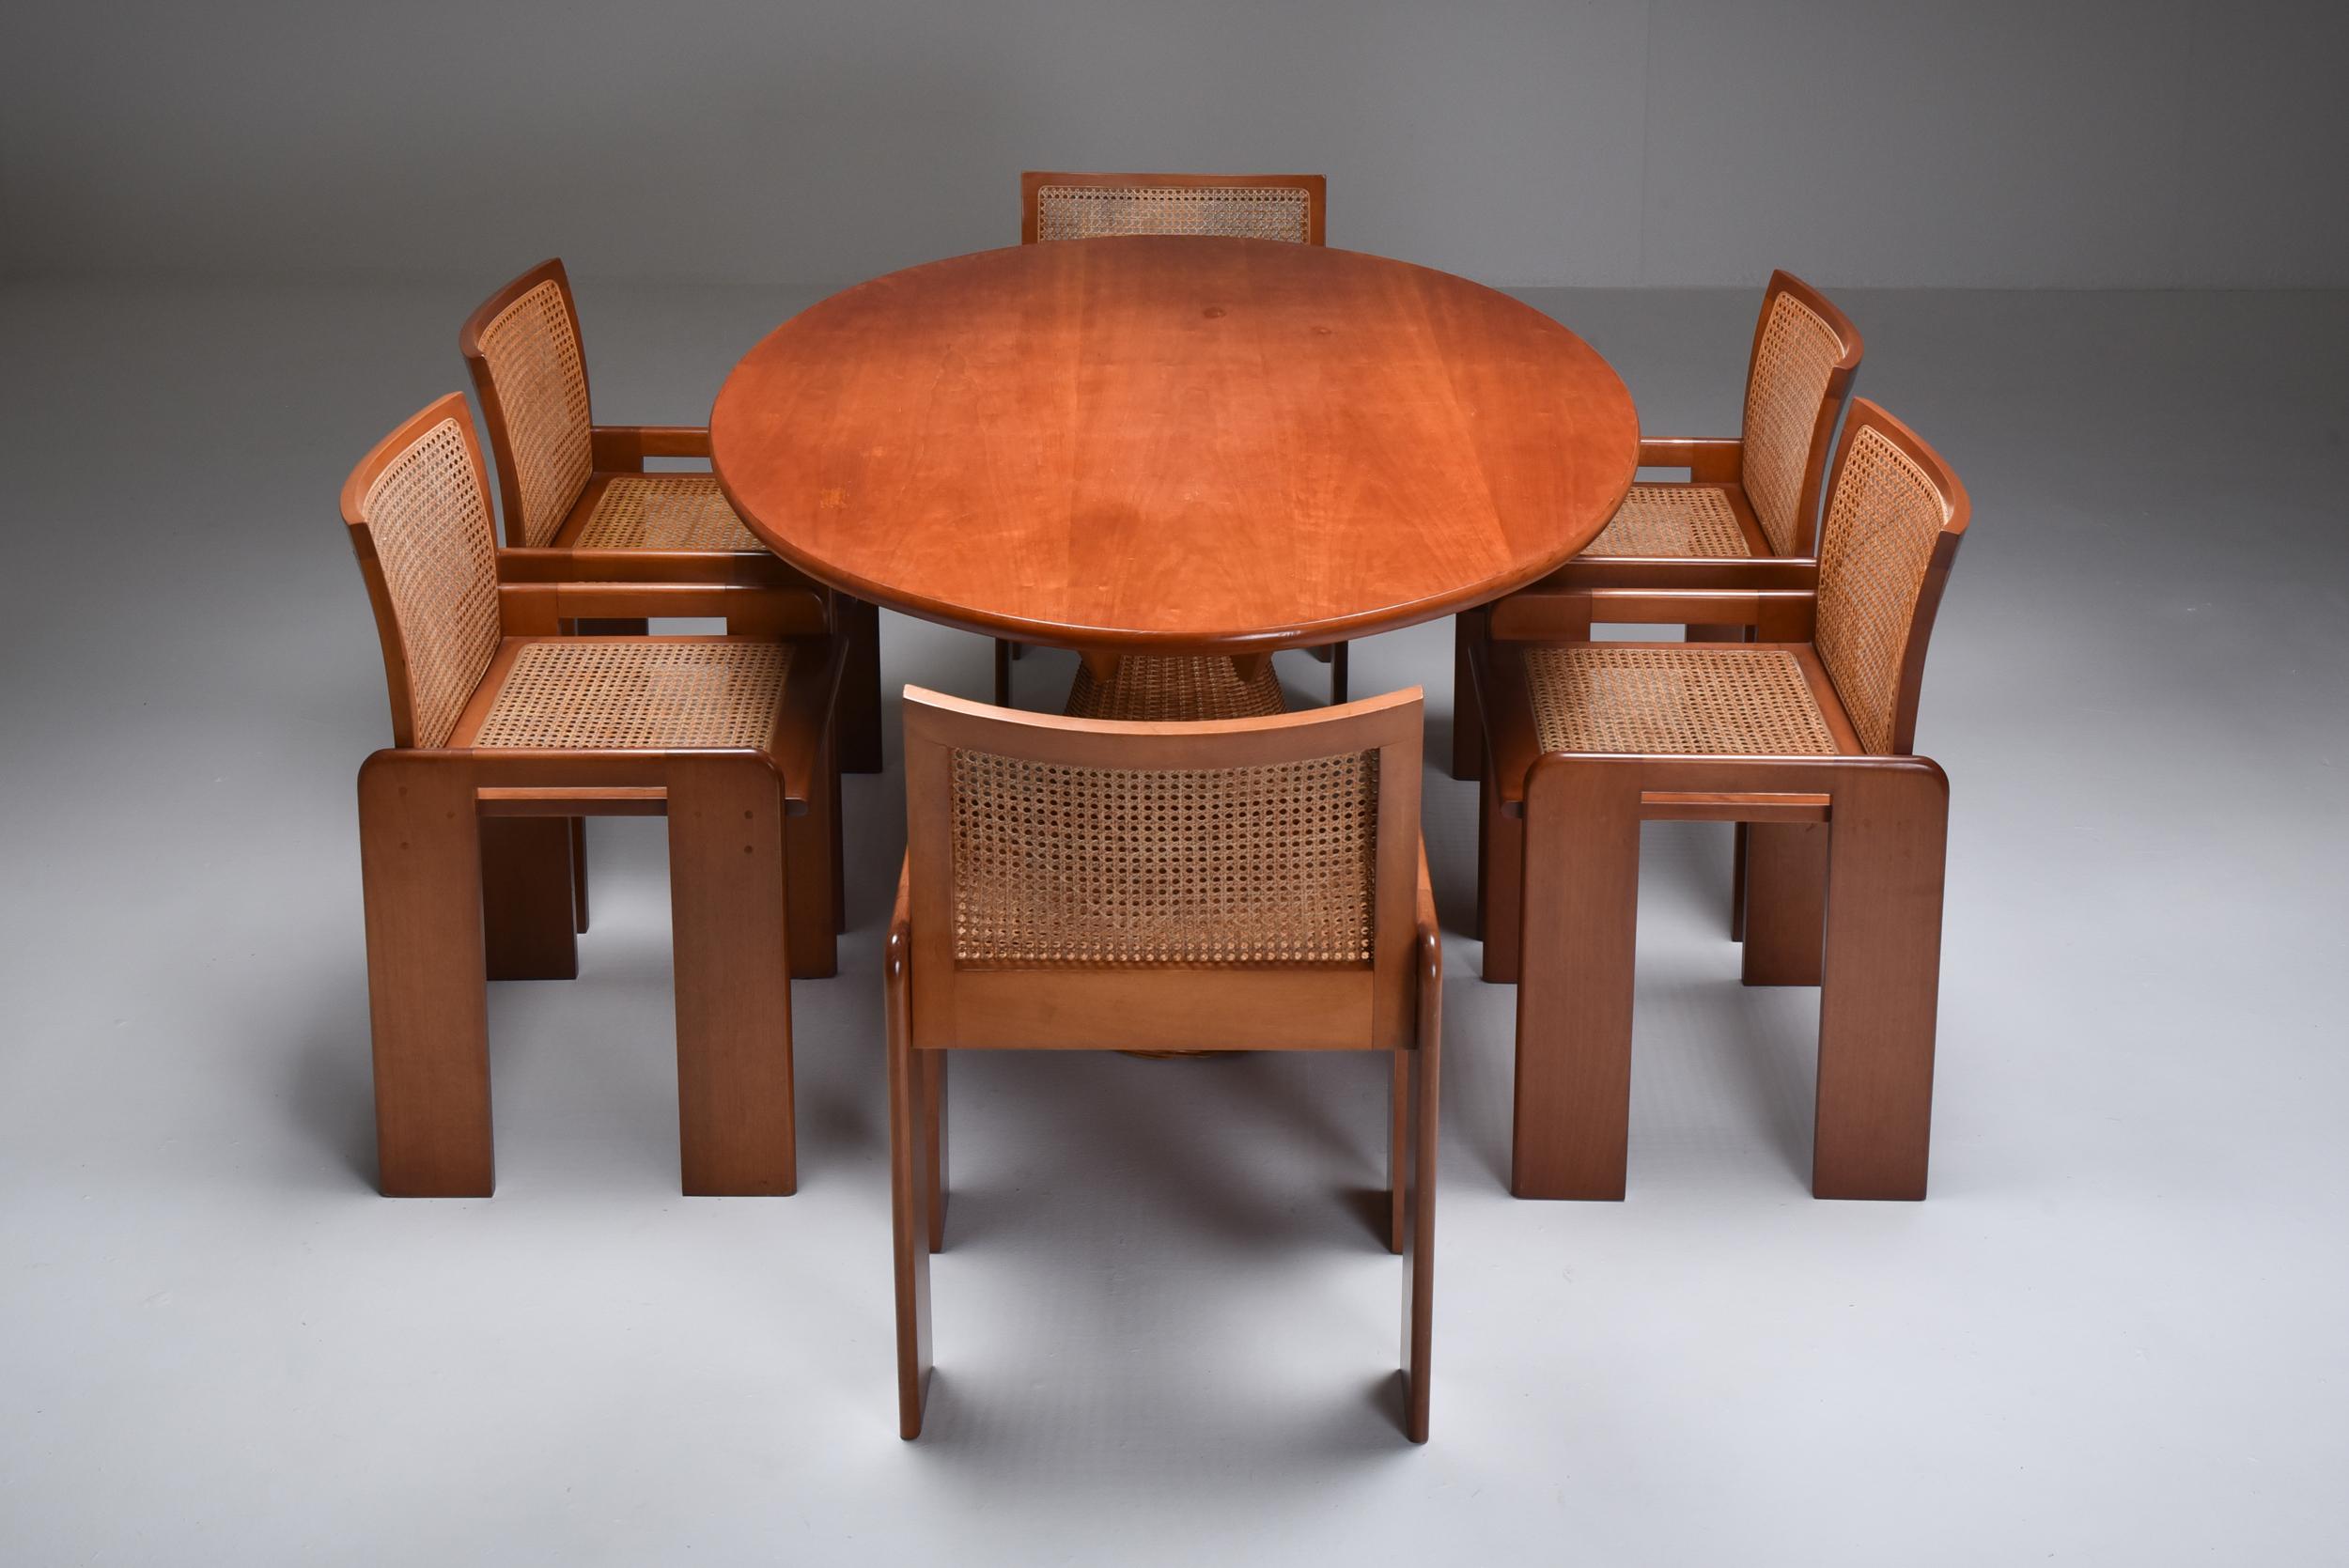 European Italian Design Oval Mid-Century Modern Dining Table on a Rattan Base